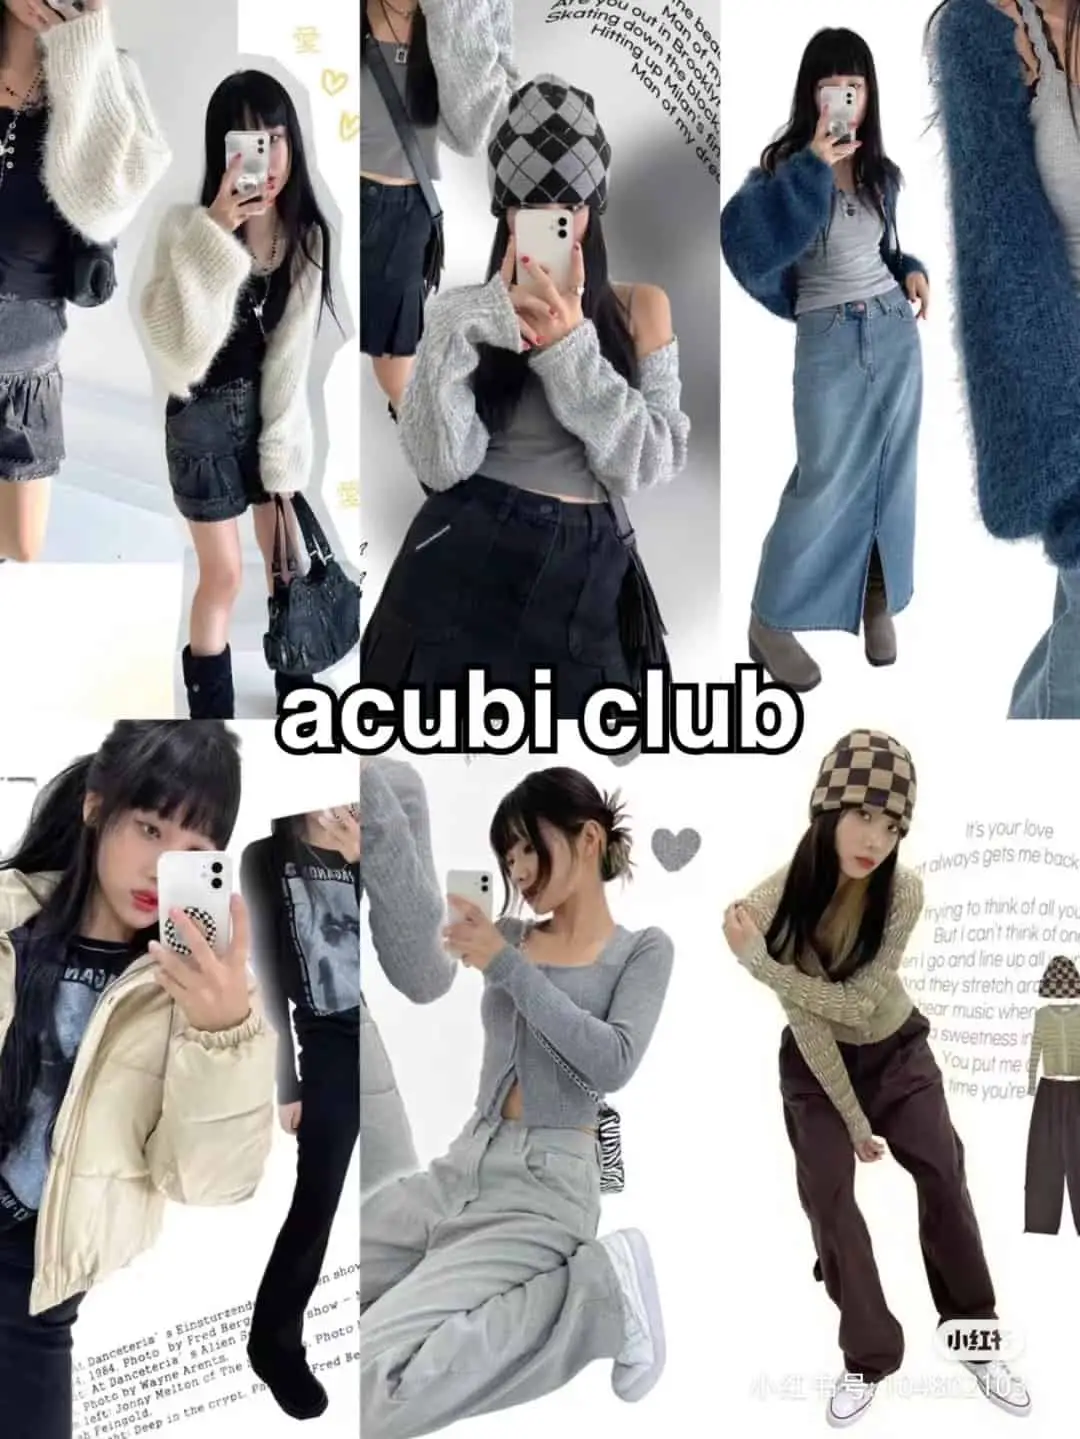 The Acubi Club Trend